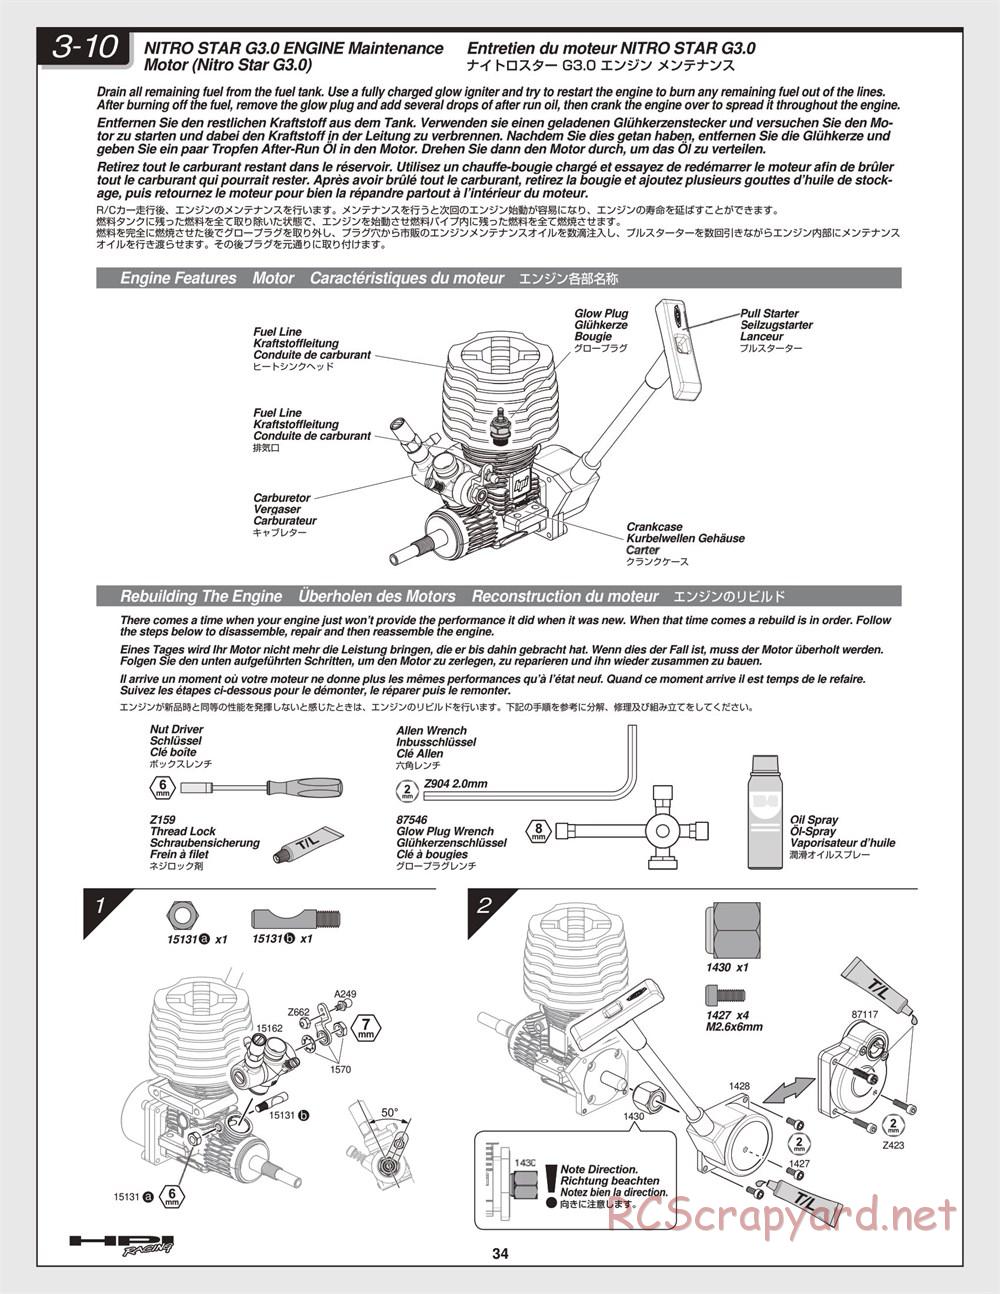 HPI - Nitro MT2 G3.0 - Manual - Page 34